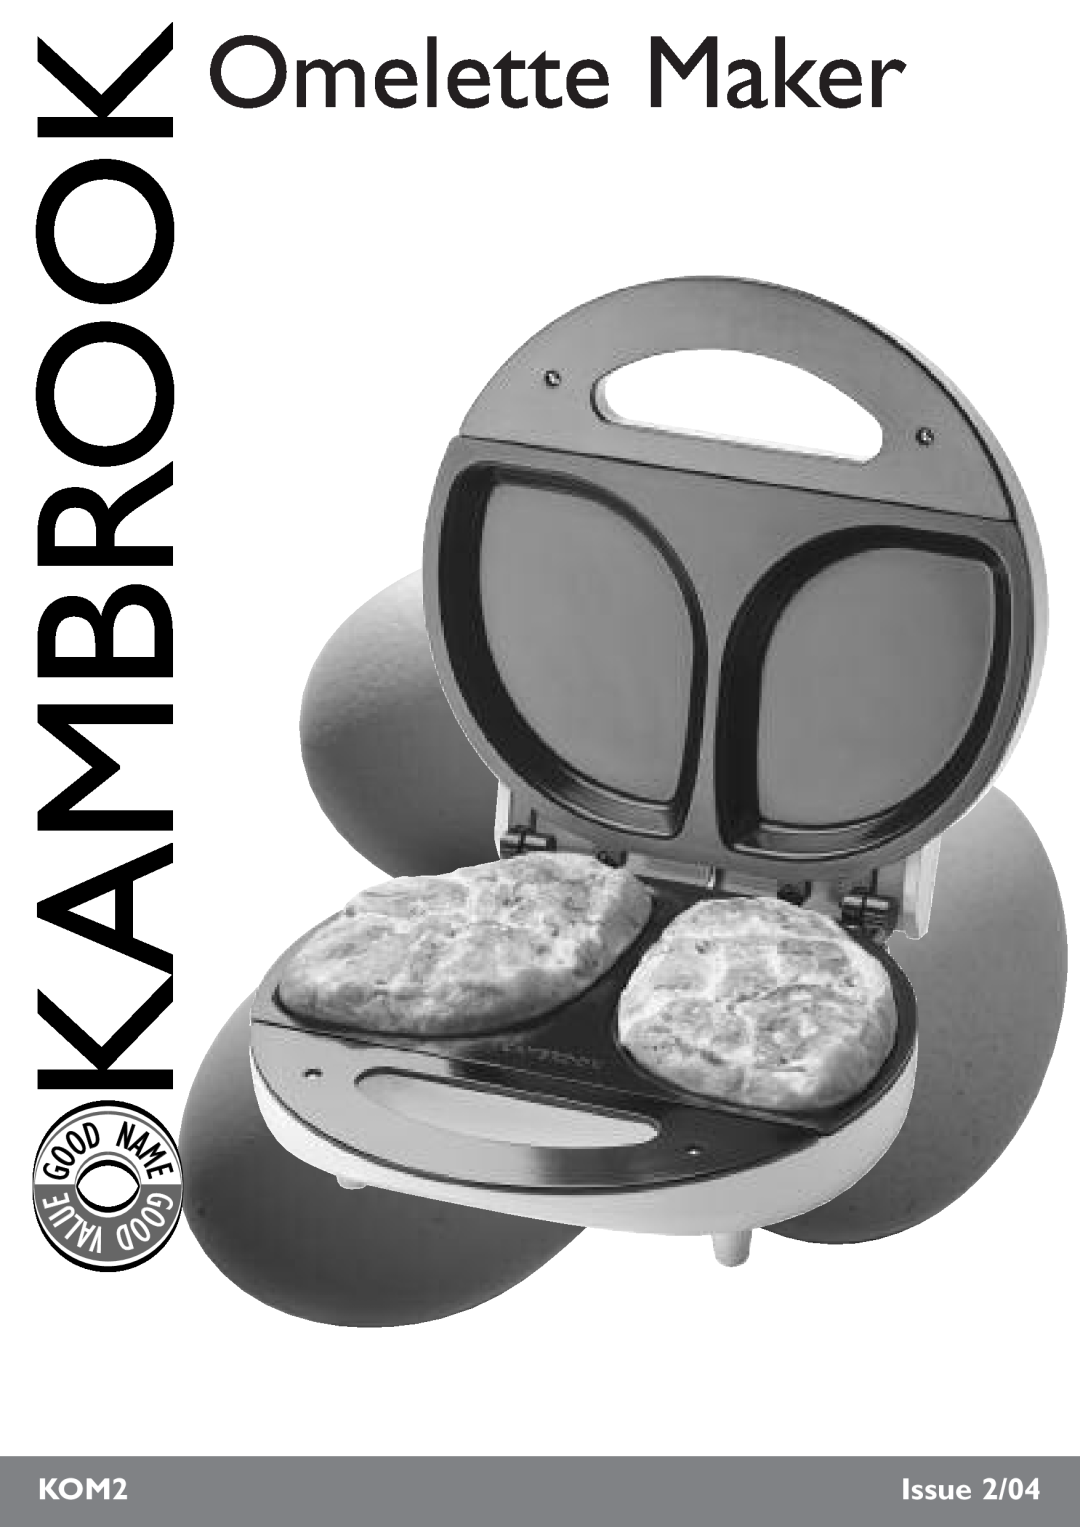 Kambrook KOM2 manual U Lav, Omelette Maker, Issue 2/04 